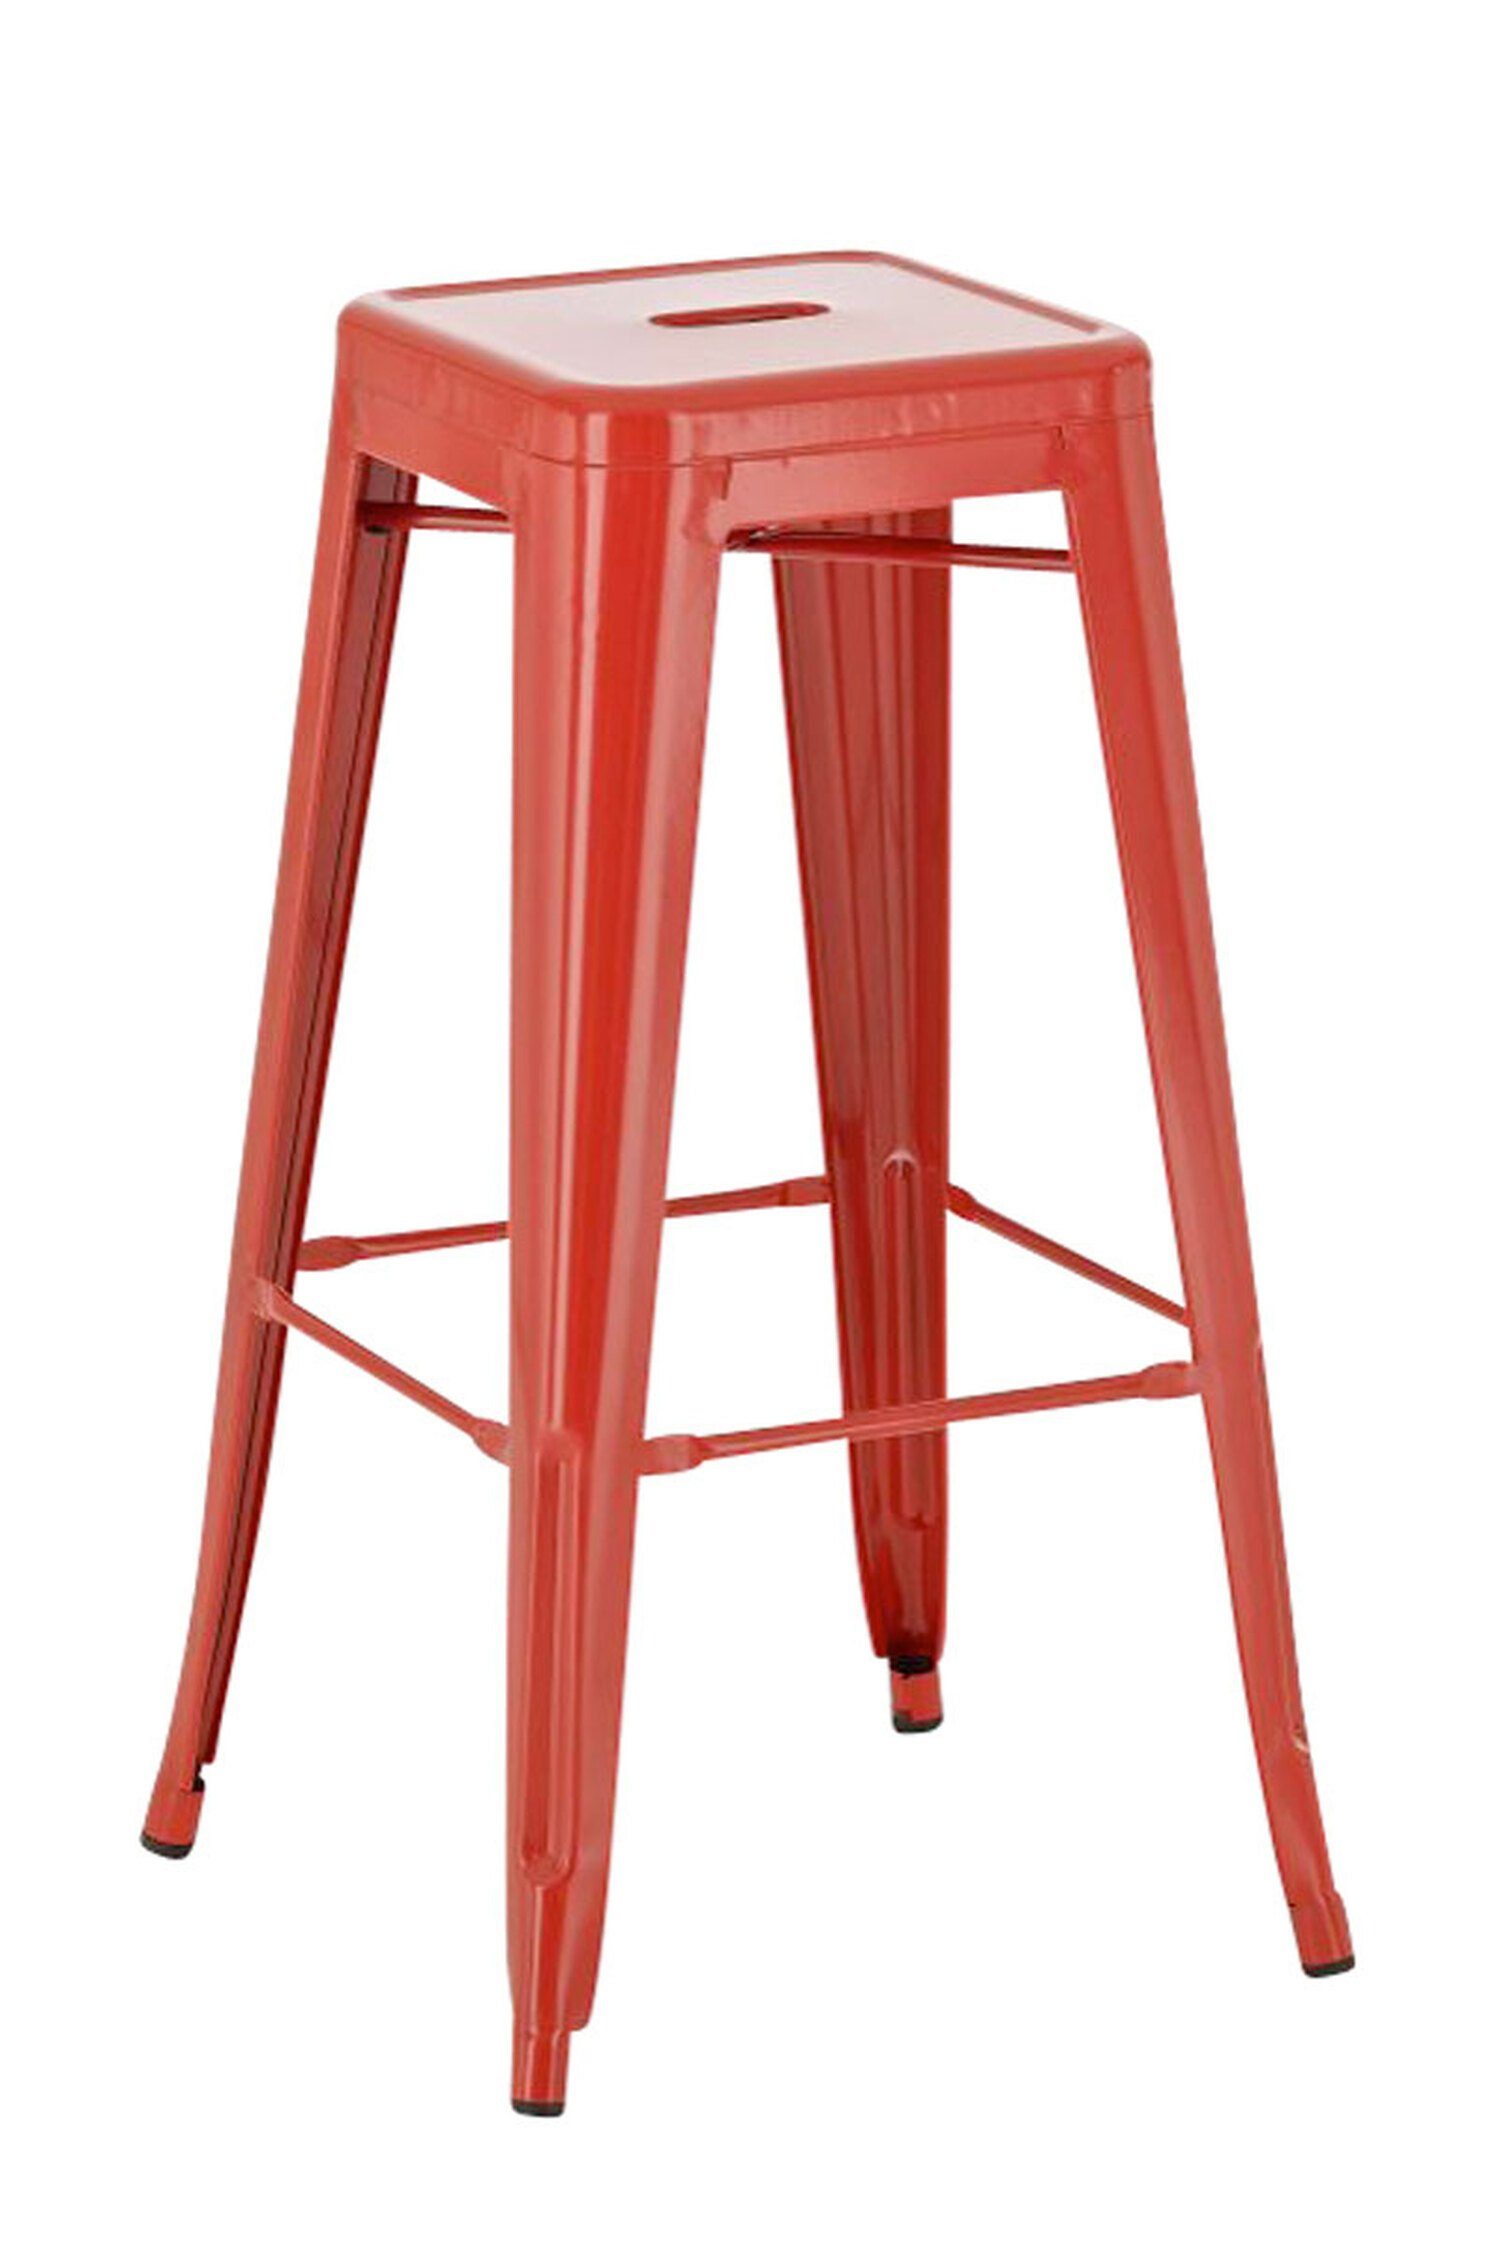 Sitzfläche: Hocker Theke angenehmer Gestell Metall Barhocker Fußstütze (Set, Joshua für Küche), - Metall Rot 2 & St., TPFLiving mit Rot -